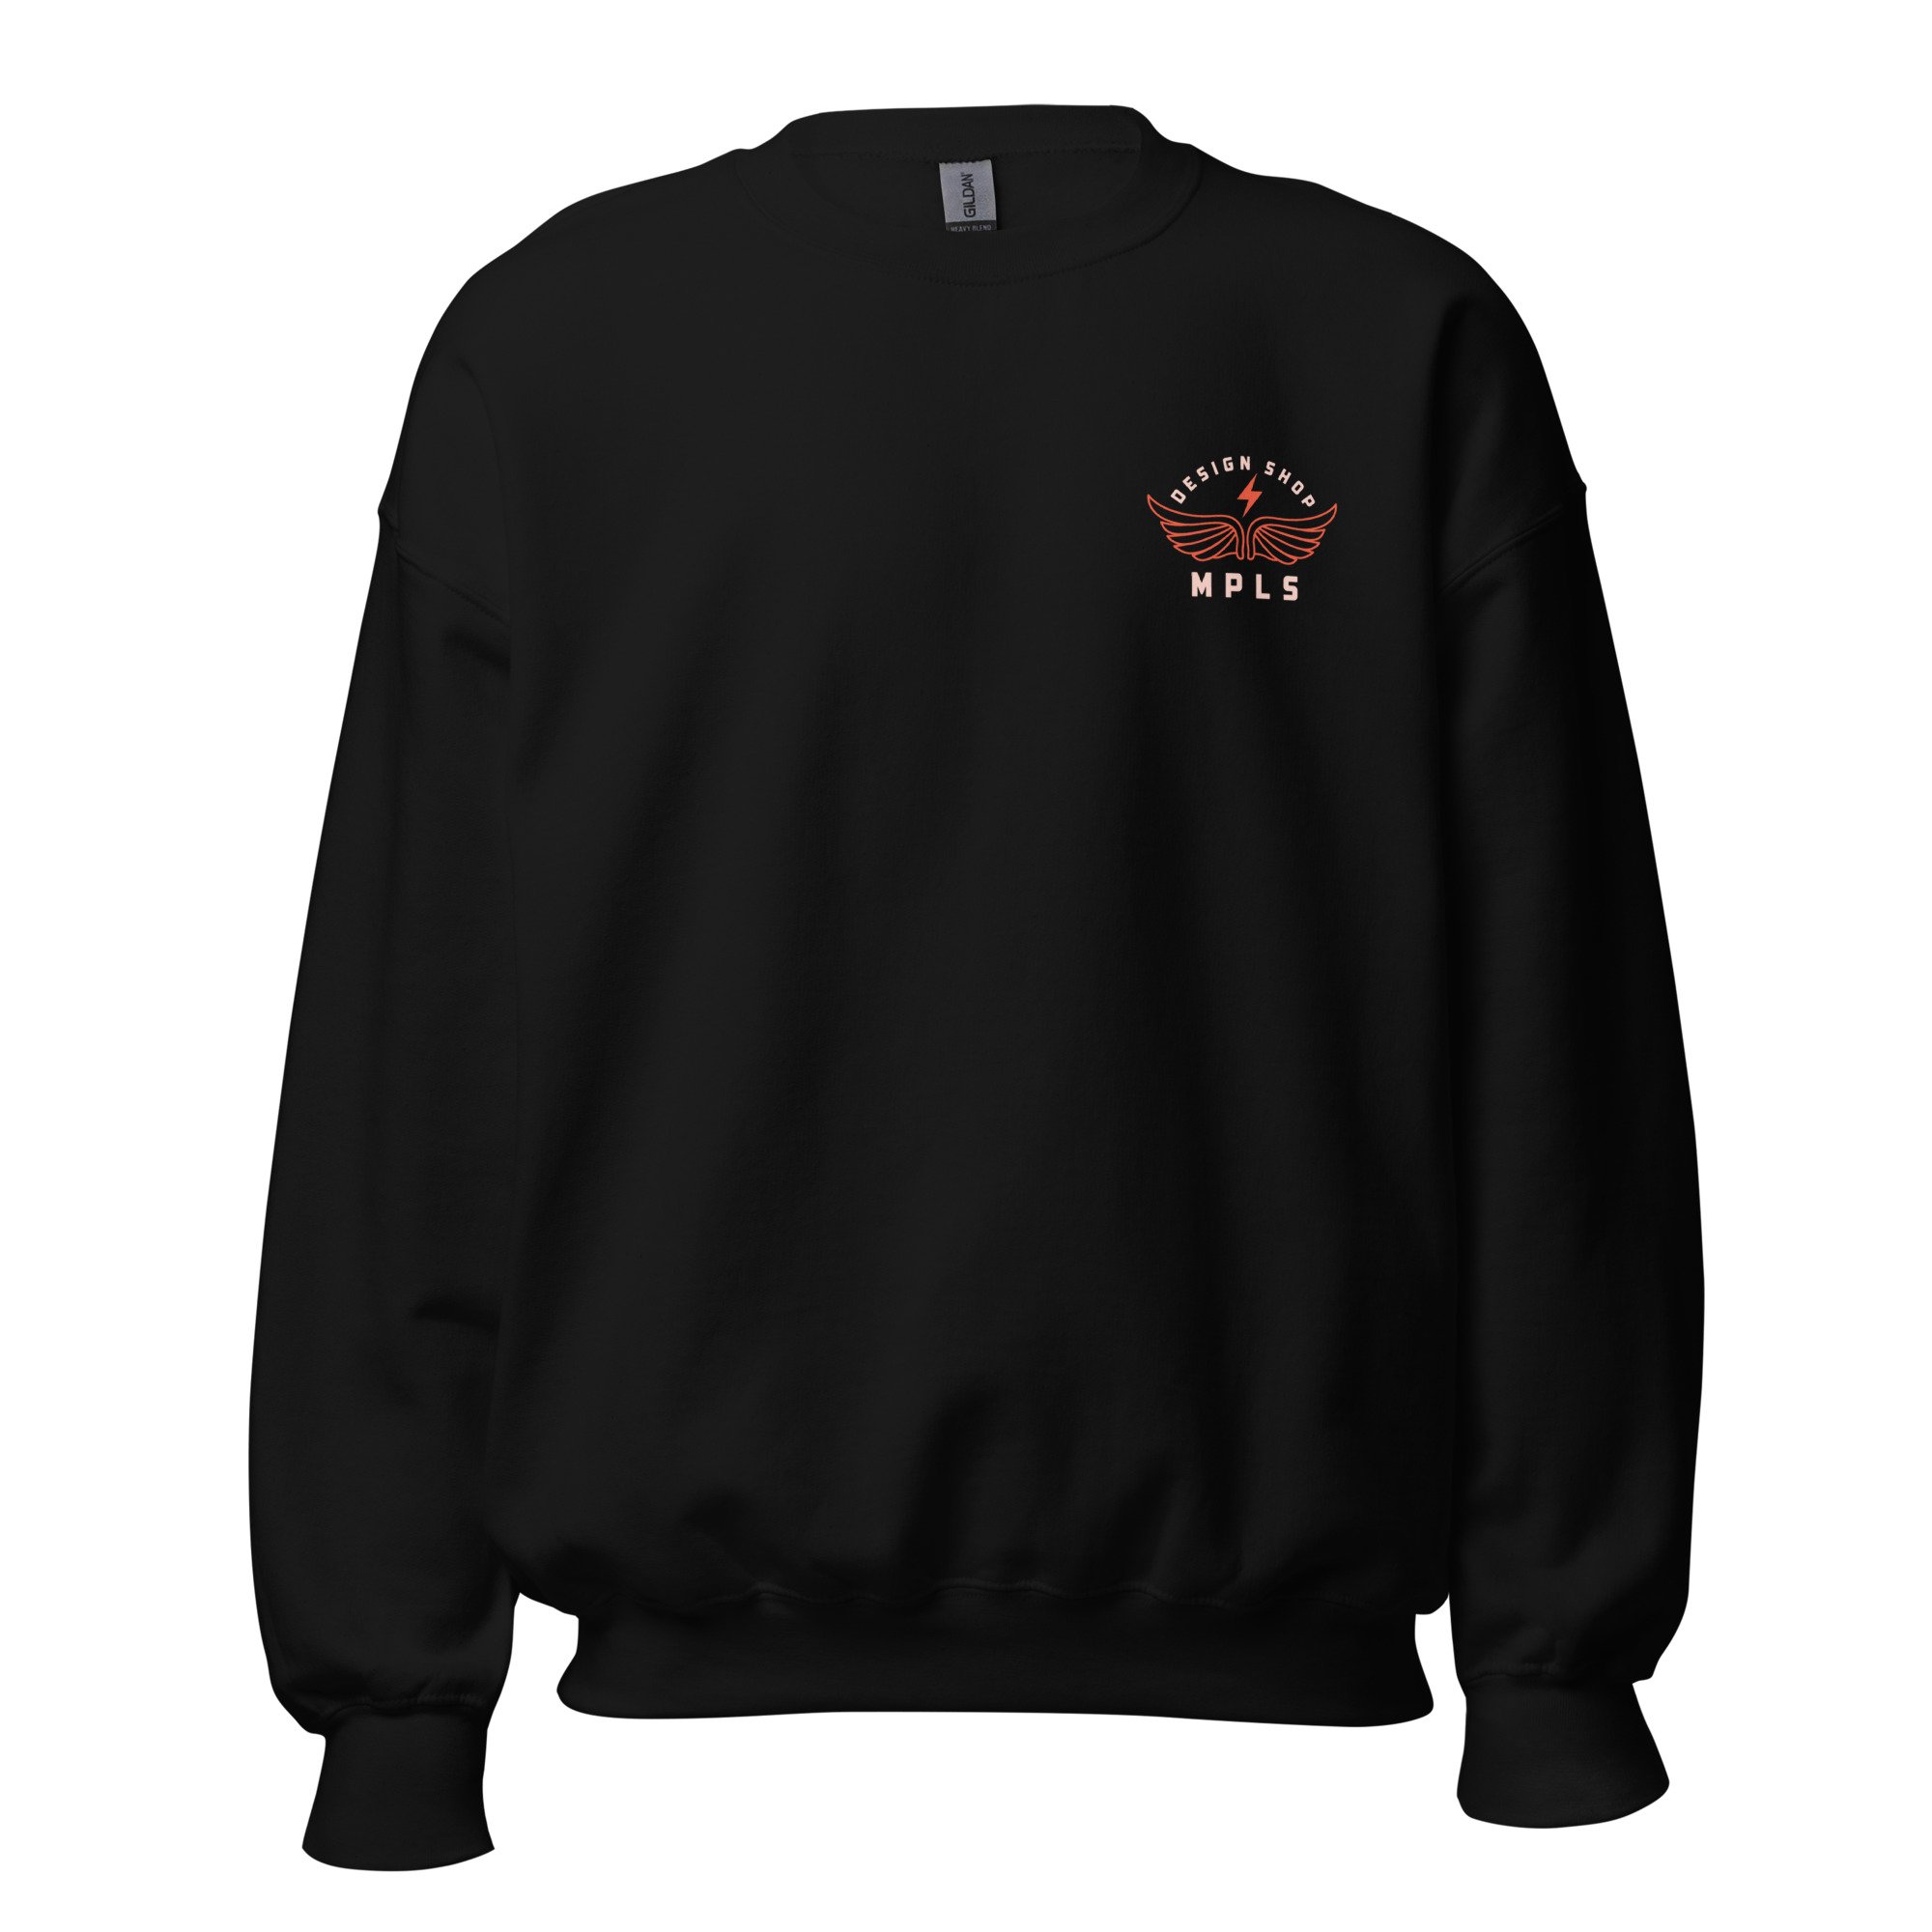 unisex-crew-neck-sweatshirt-black-front-64c3e31abbb62.jpg